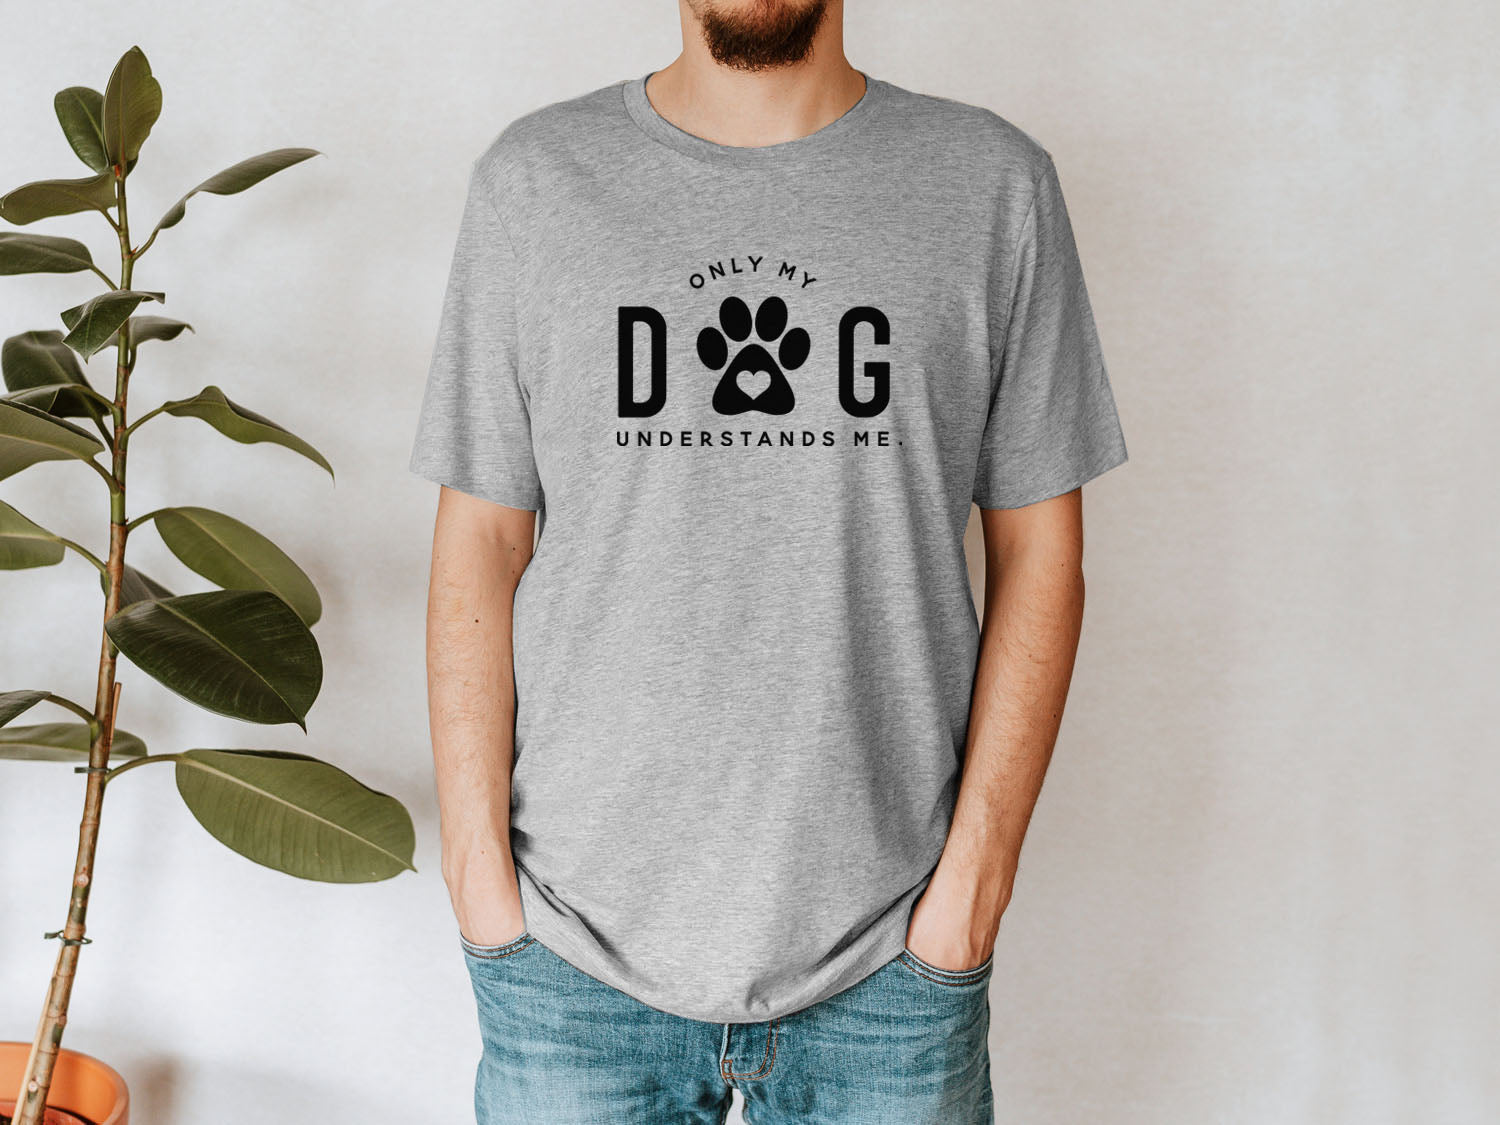 Only My Dog Understands Me T-shirt - Fun Pet Love Minimal Design Printed Tee Shirt